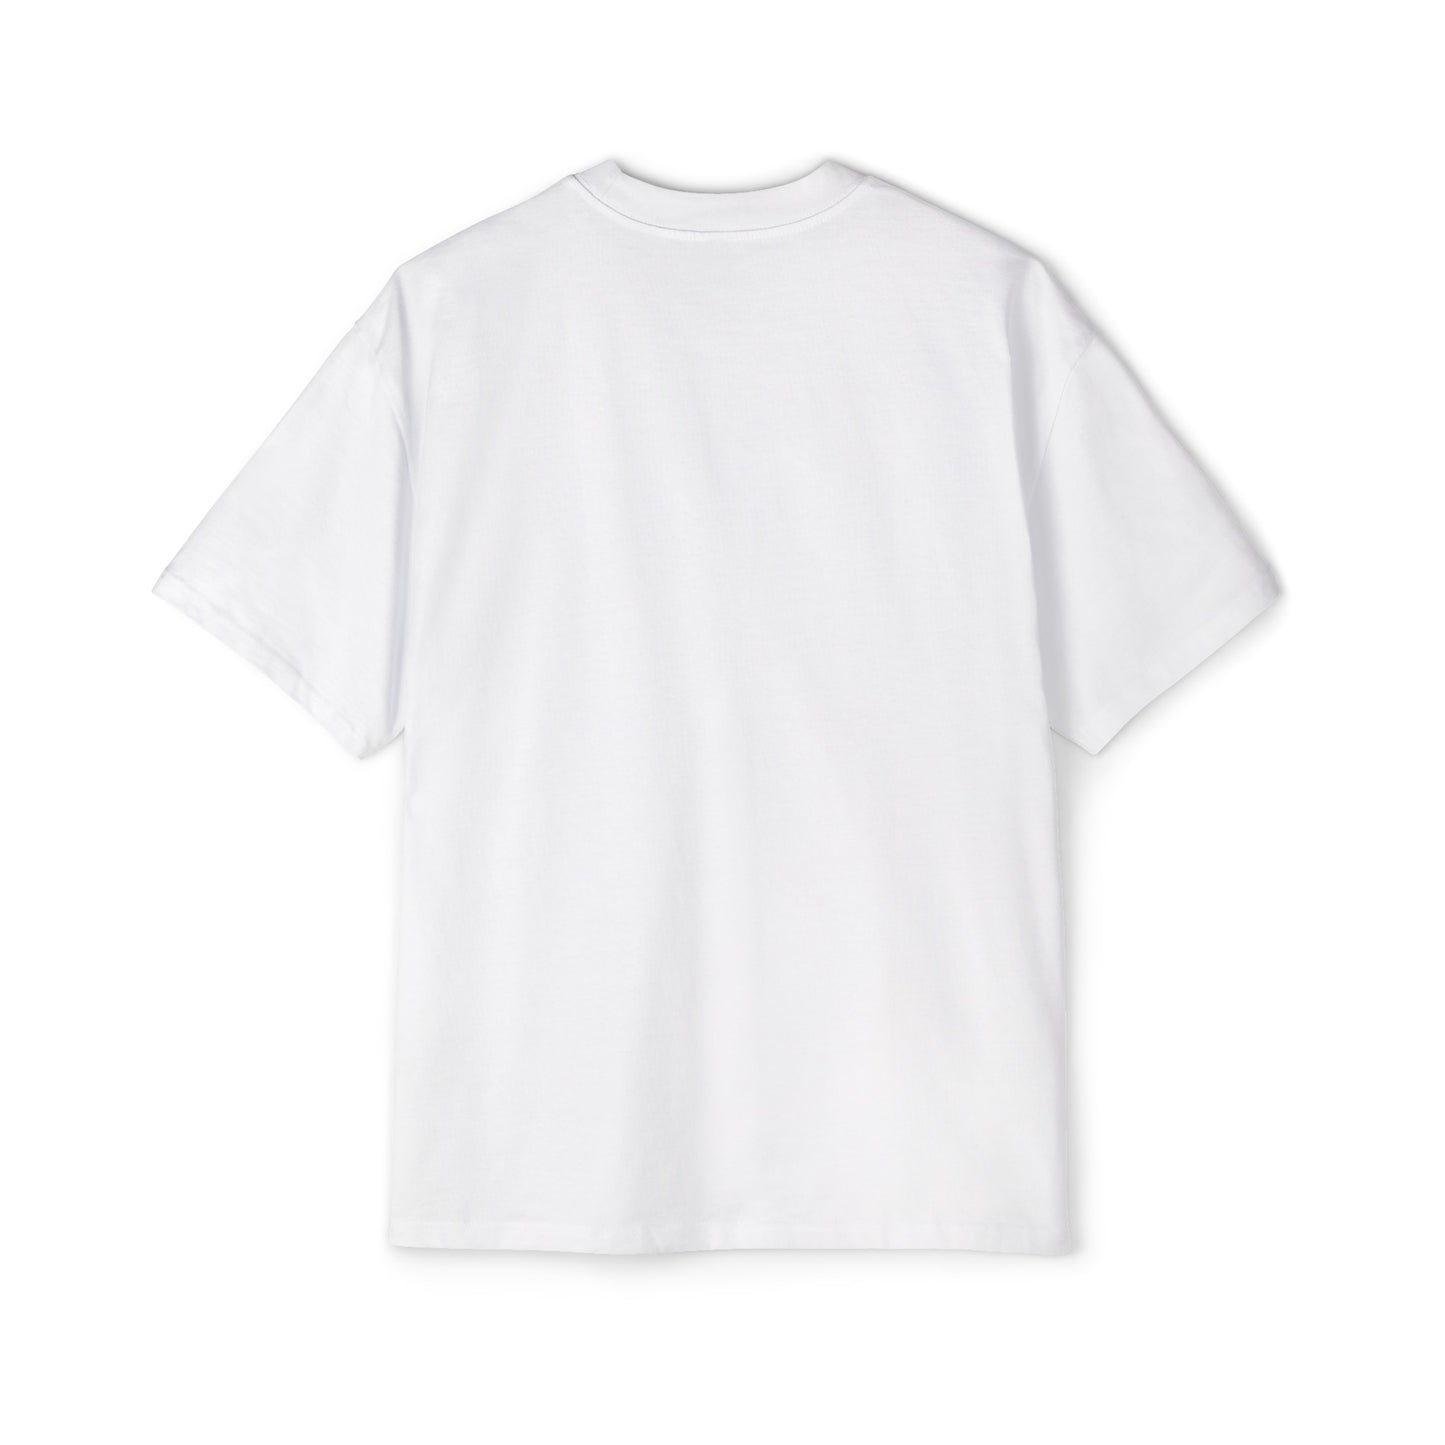 Protostamps White T-shirt